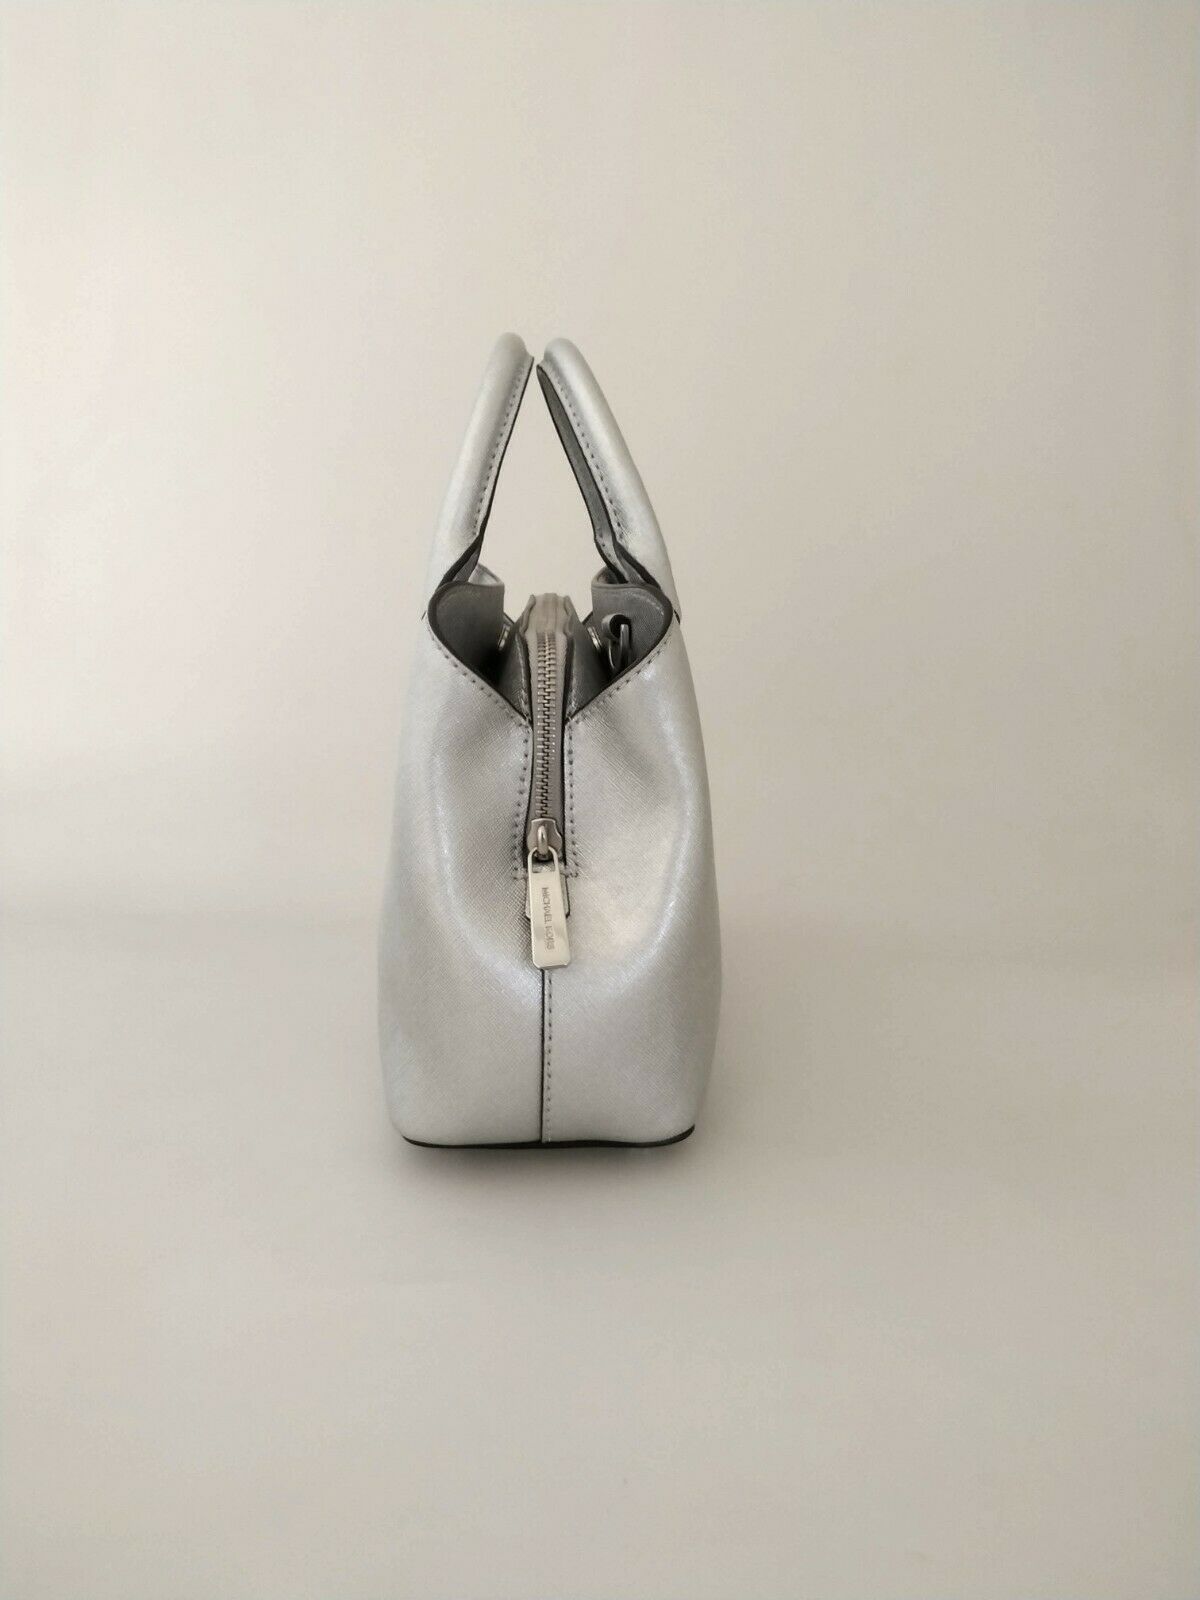 Michael Kors - Authenticated Savannah Handbag - Leather Black Plain for Women, Very Good Condition